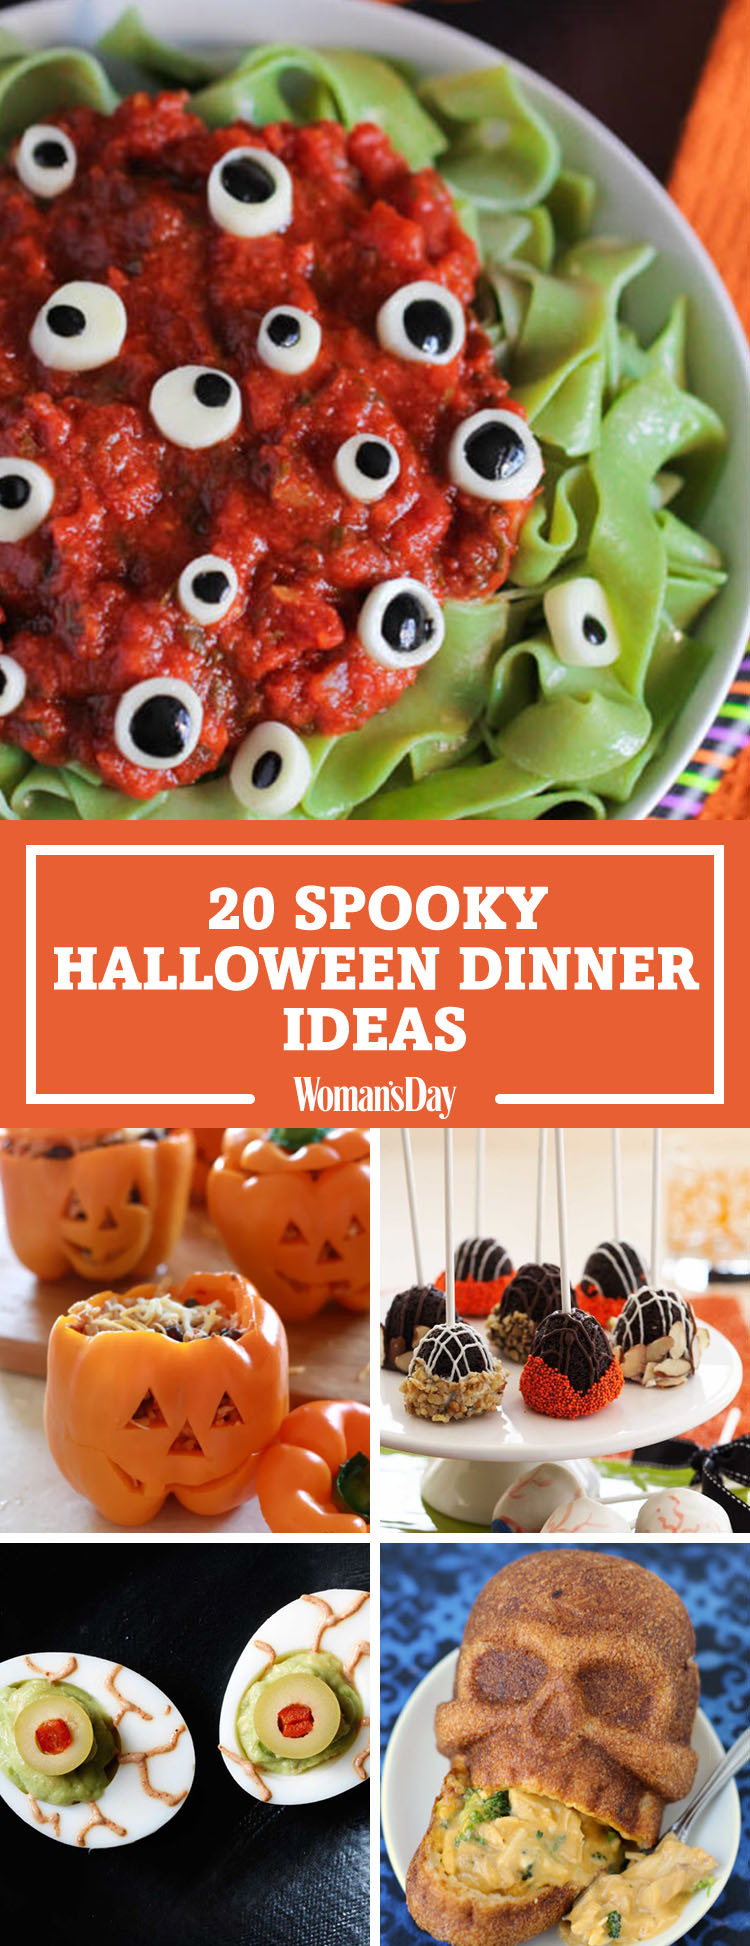 Spooky Party Food Ideas For Halloween
 25 Spooky Halloween Dinner Ideas Best Recipes for